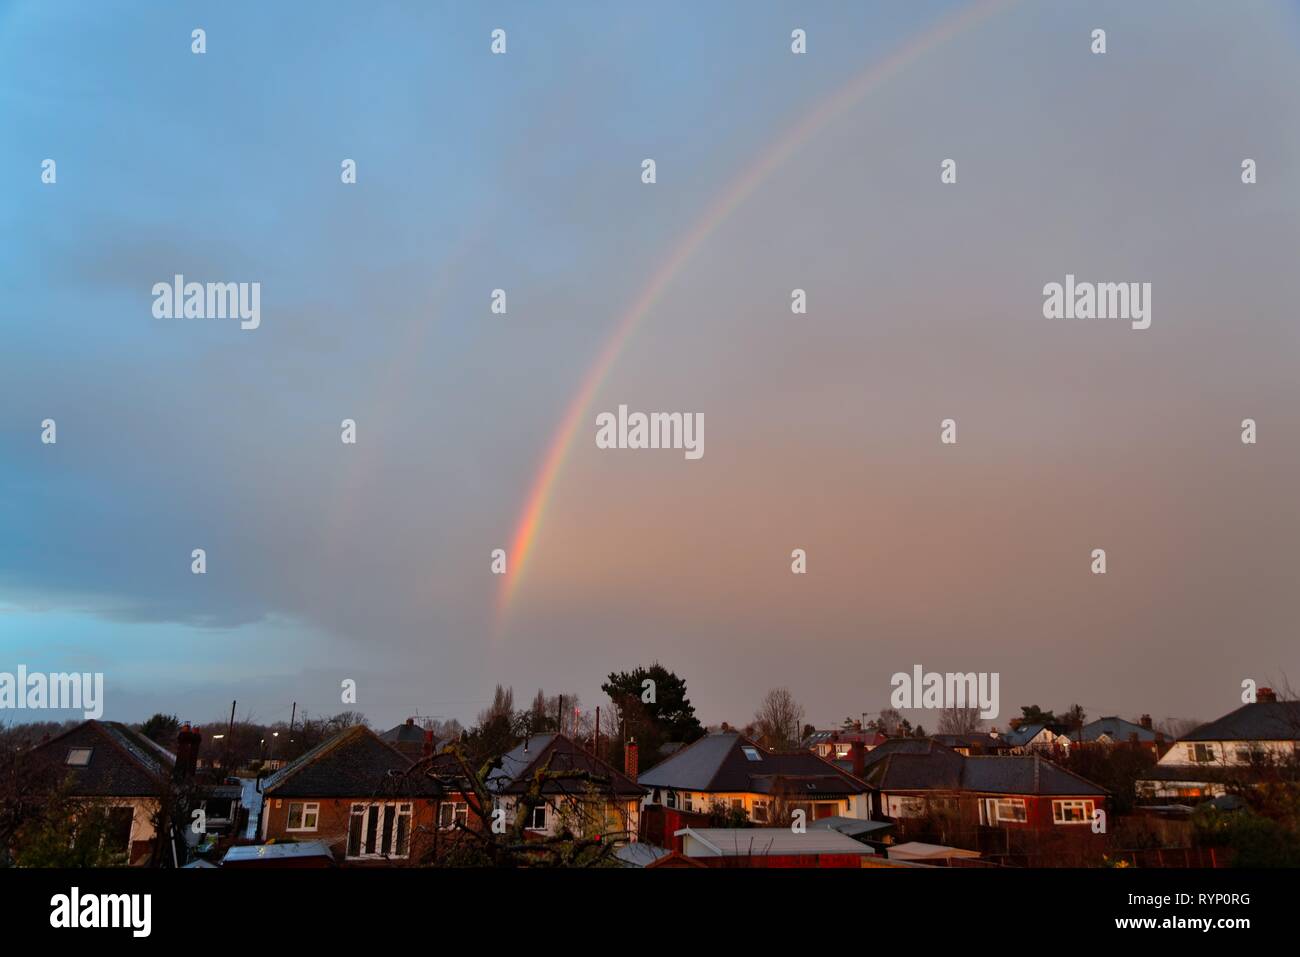 A winter rainbow against a dark stormy sky in suburban area Shepperton England UK Stock Photo